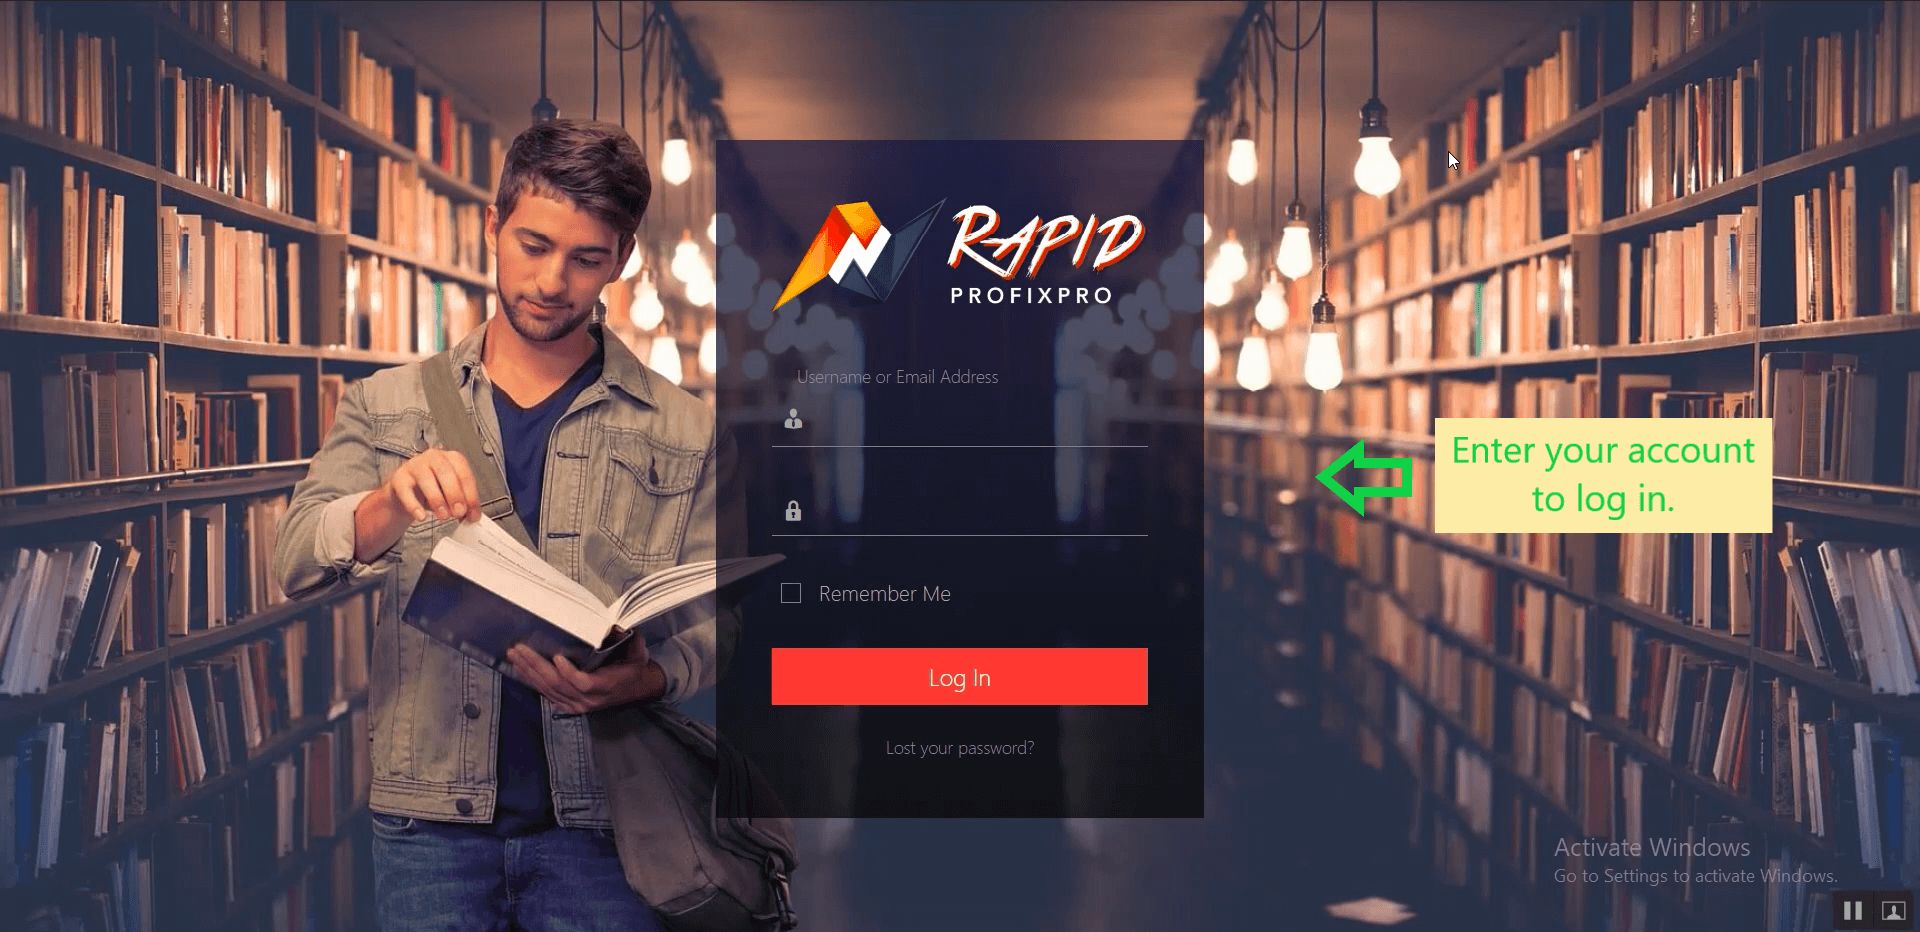 RapidProfixPro-Review-Step-1-1